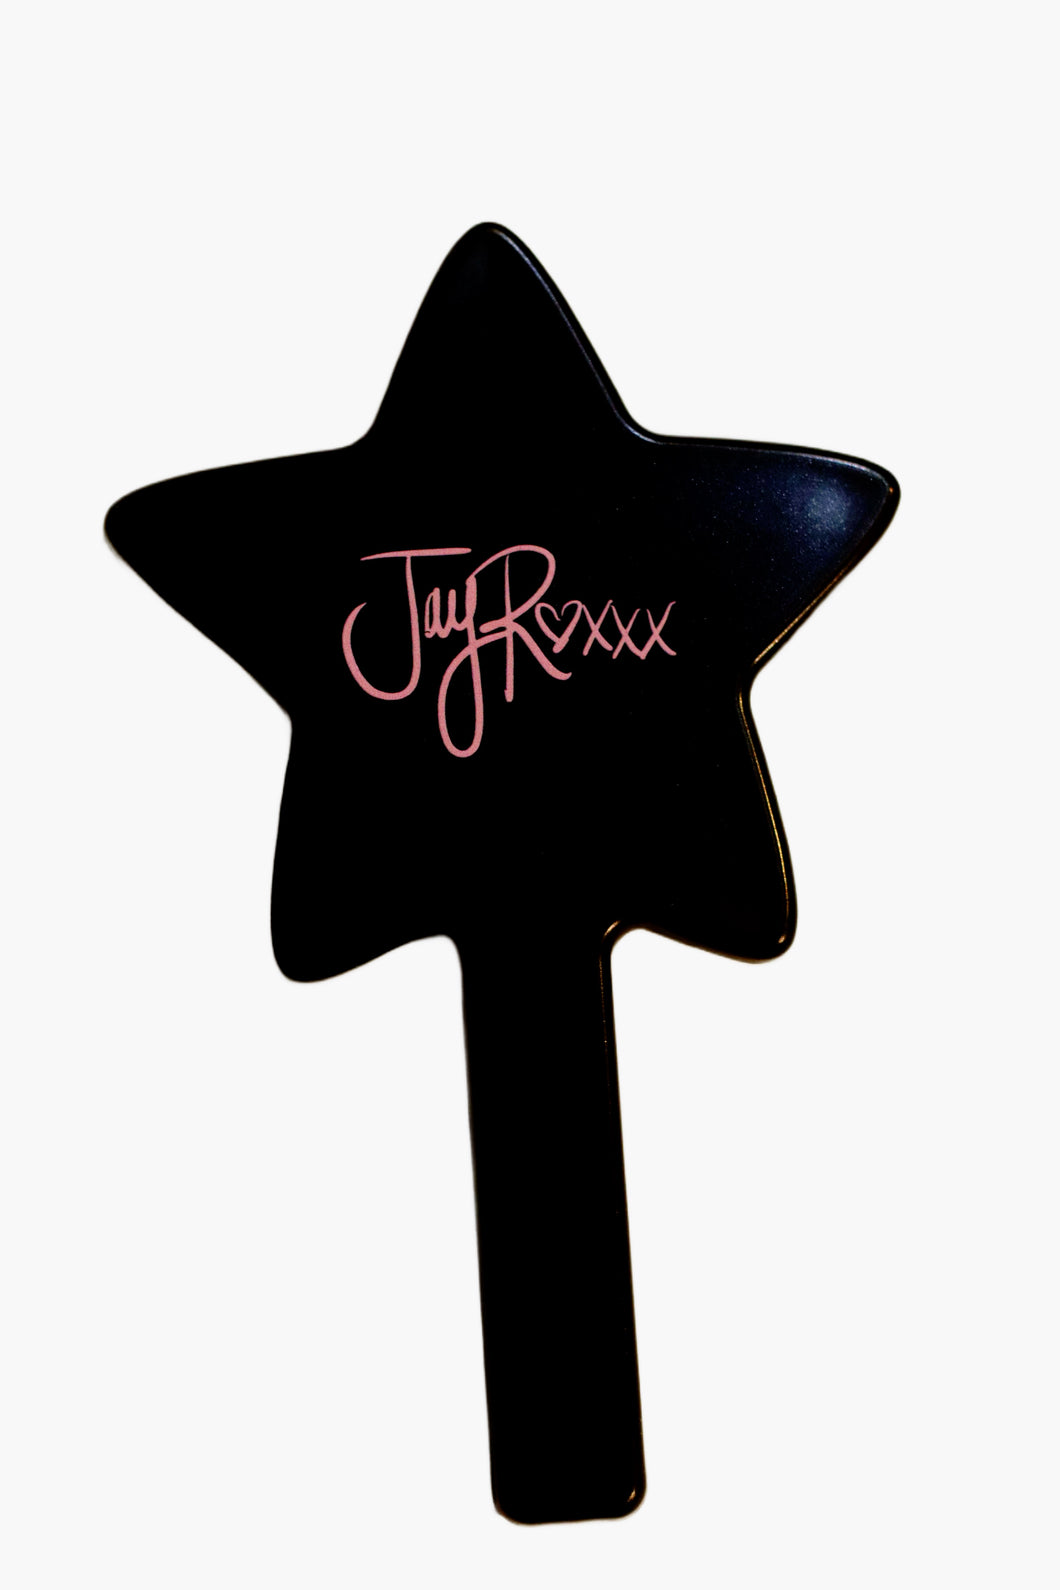 Jay Roxxx Star Mirror